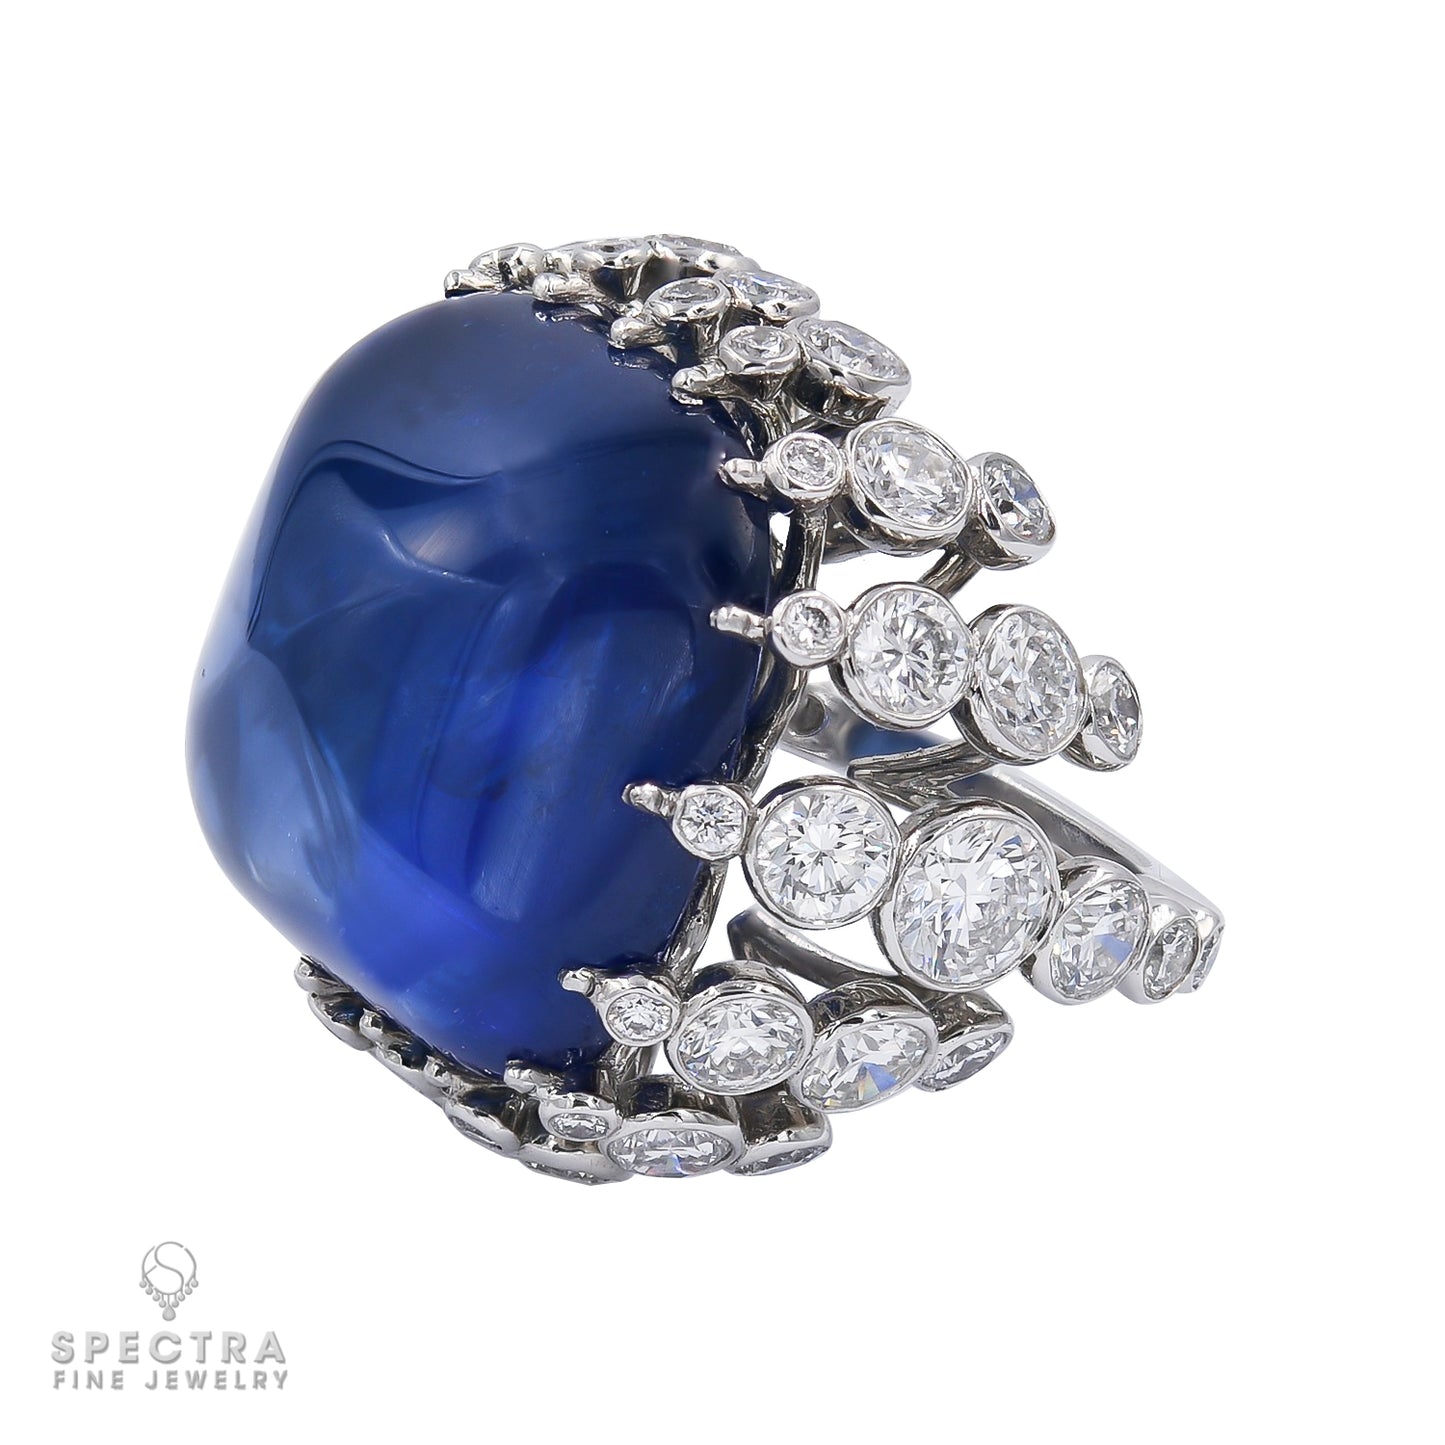 Spectra Fine Jewelry's Magnificent 43.22 Carat Ceylon Sapphire Diamond Ring